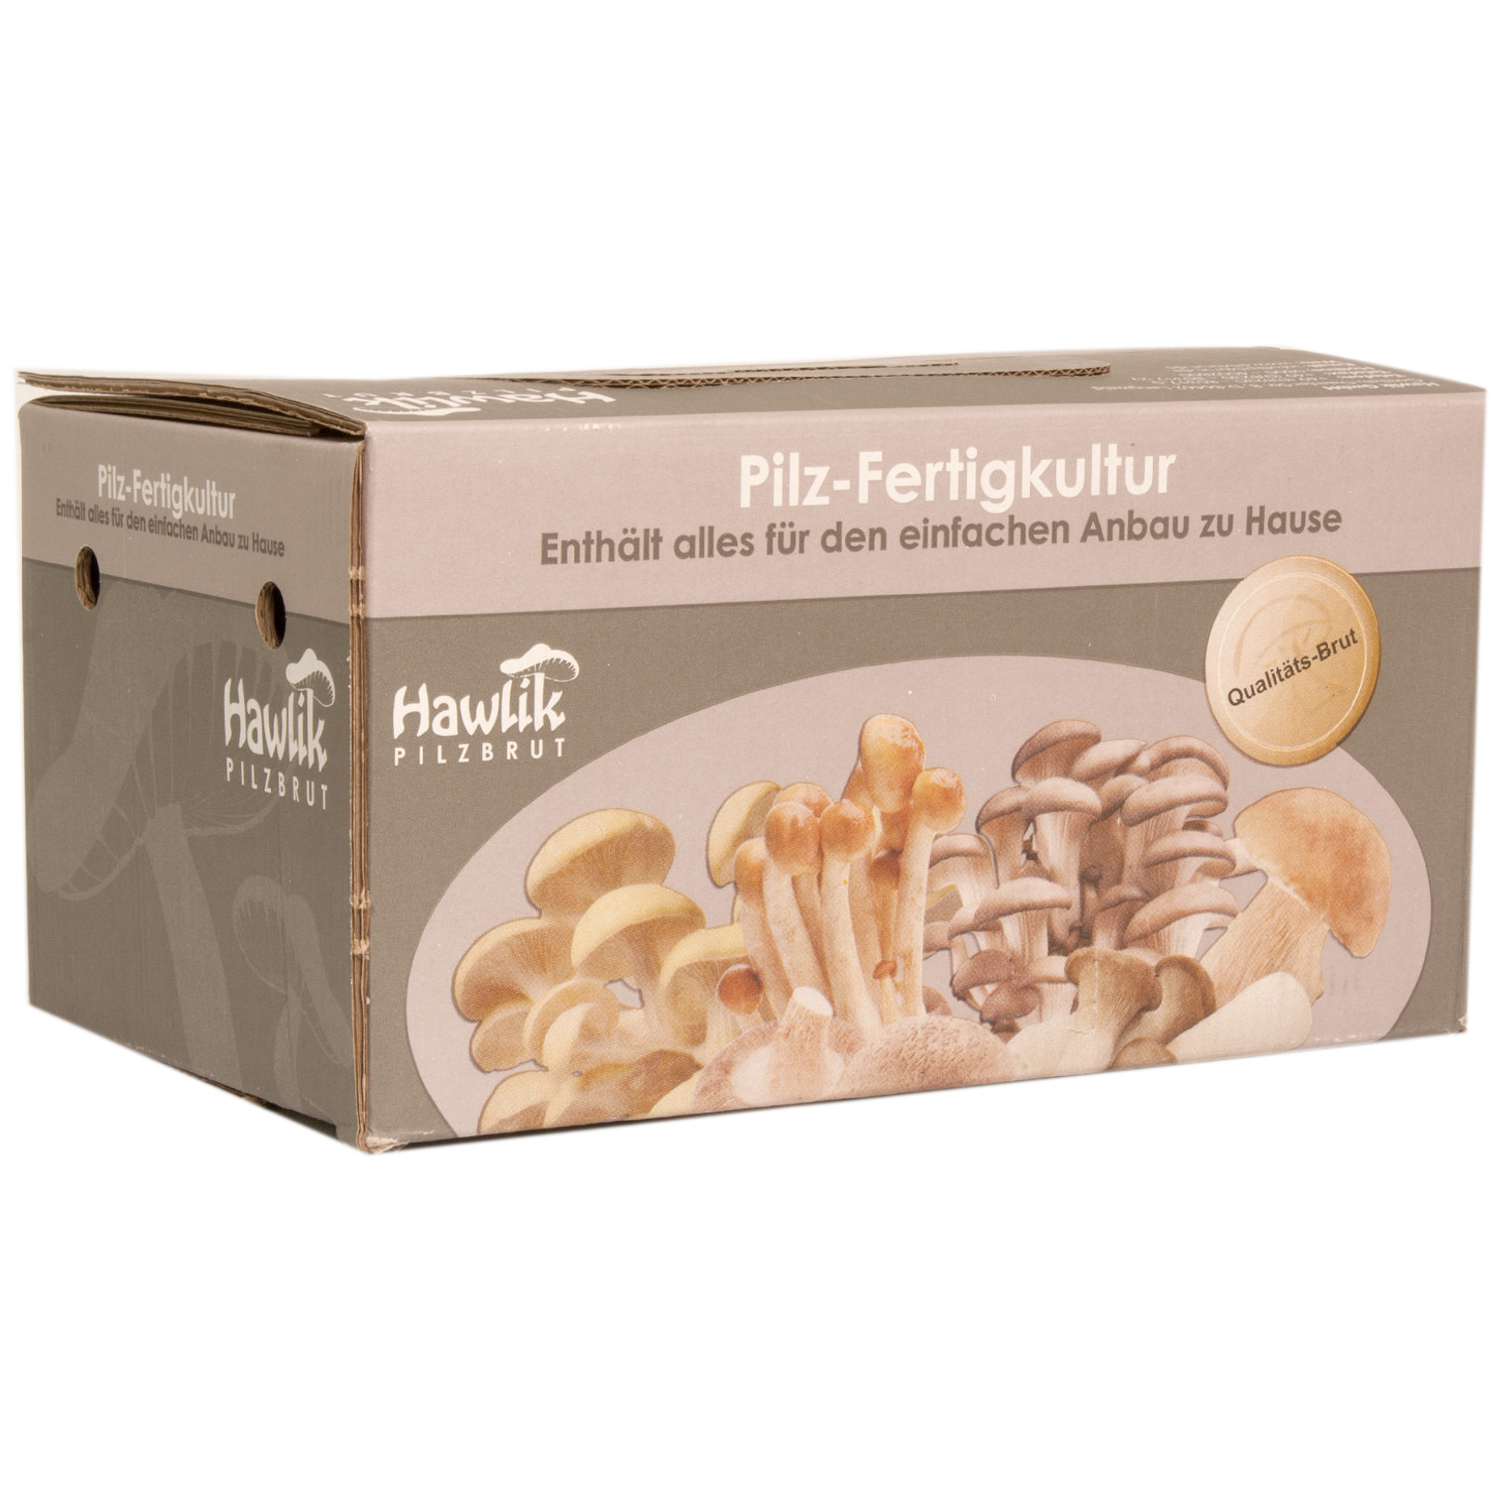 Hawlik Pilzbrut - Cremini champignon mushroom